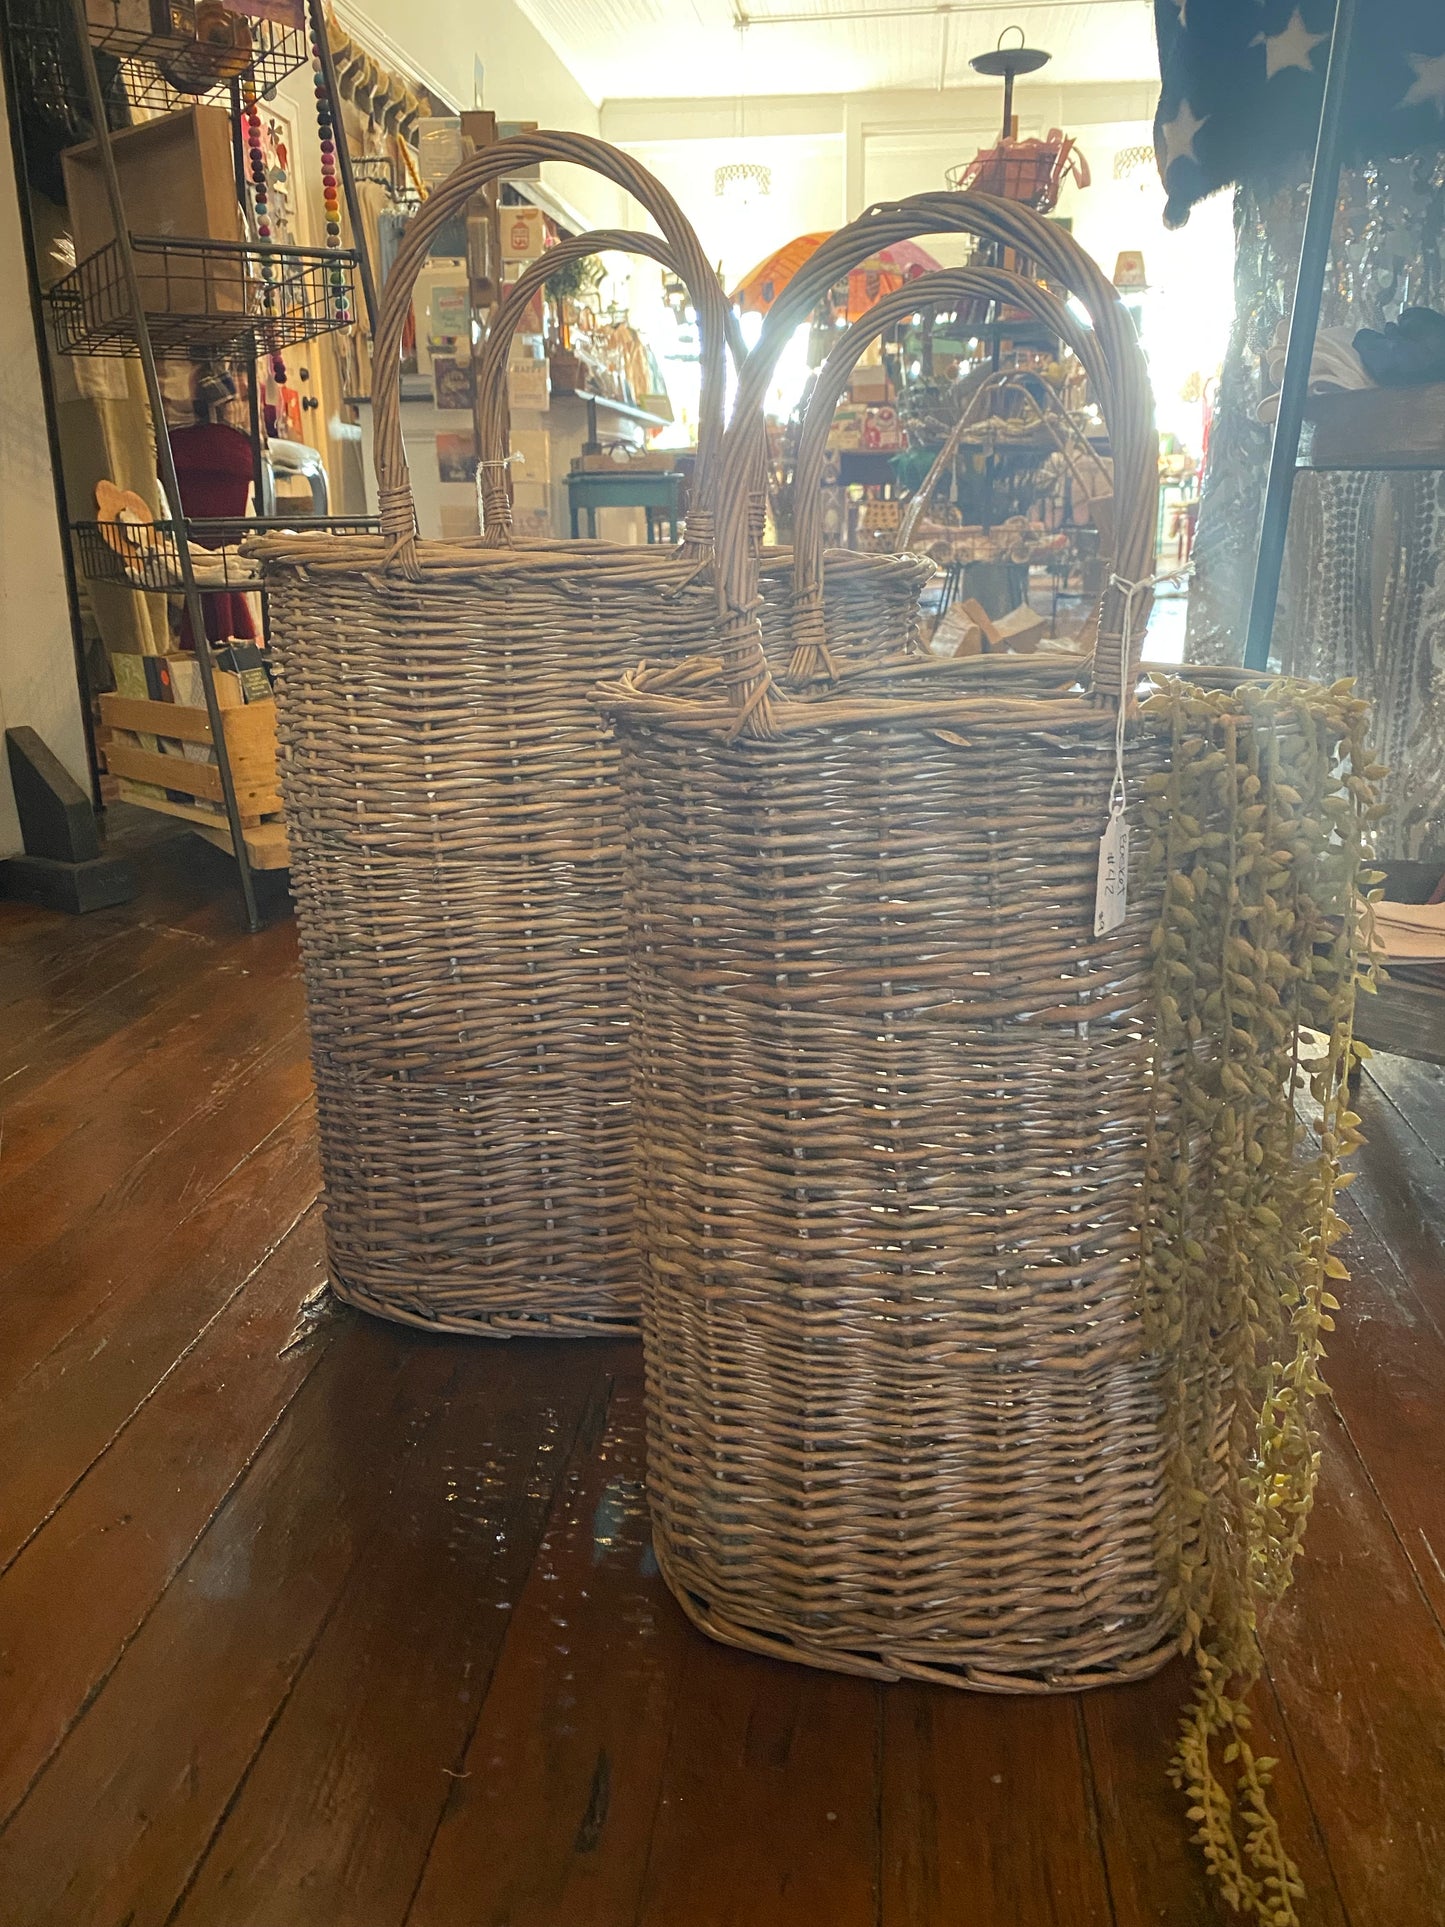 Decorative baskets